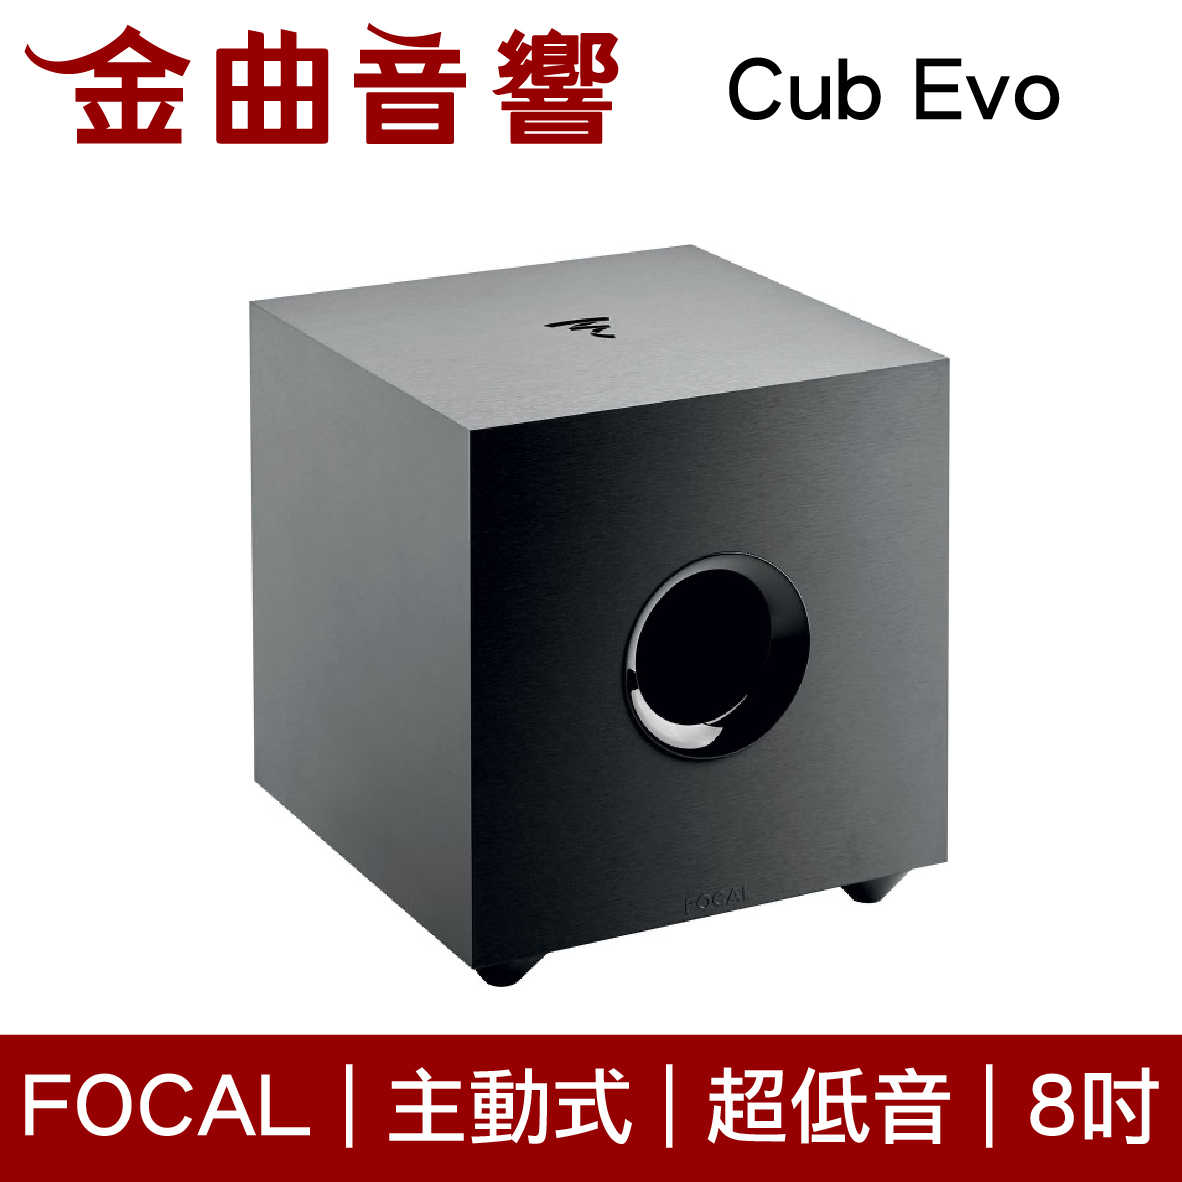 FOCAL Cub Evo 8吋 主動式 超低音 重低音 喇叭 | 金曲音響